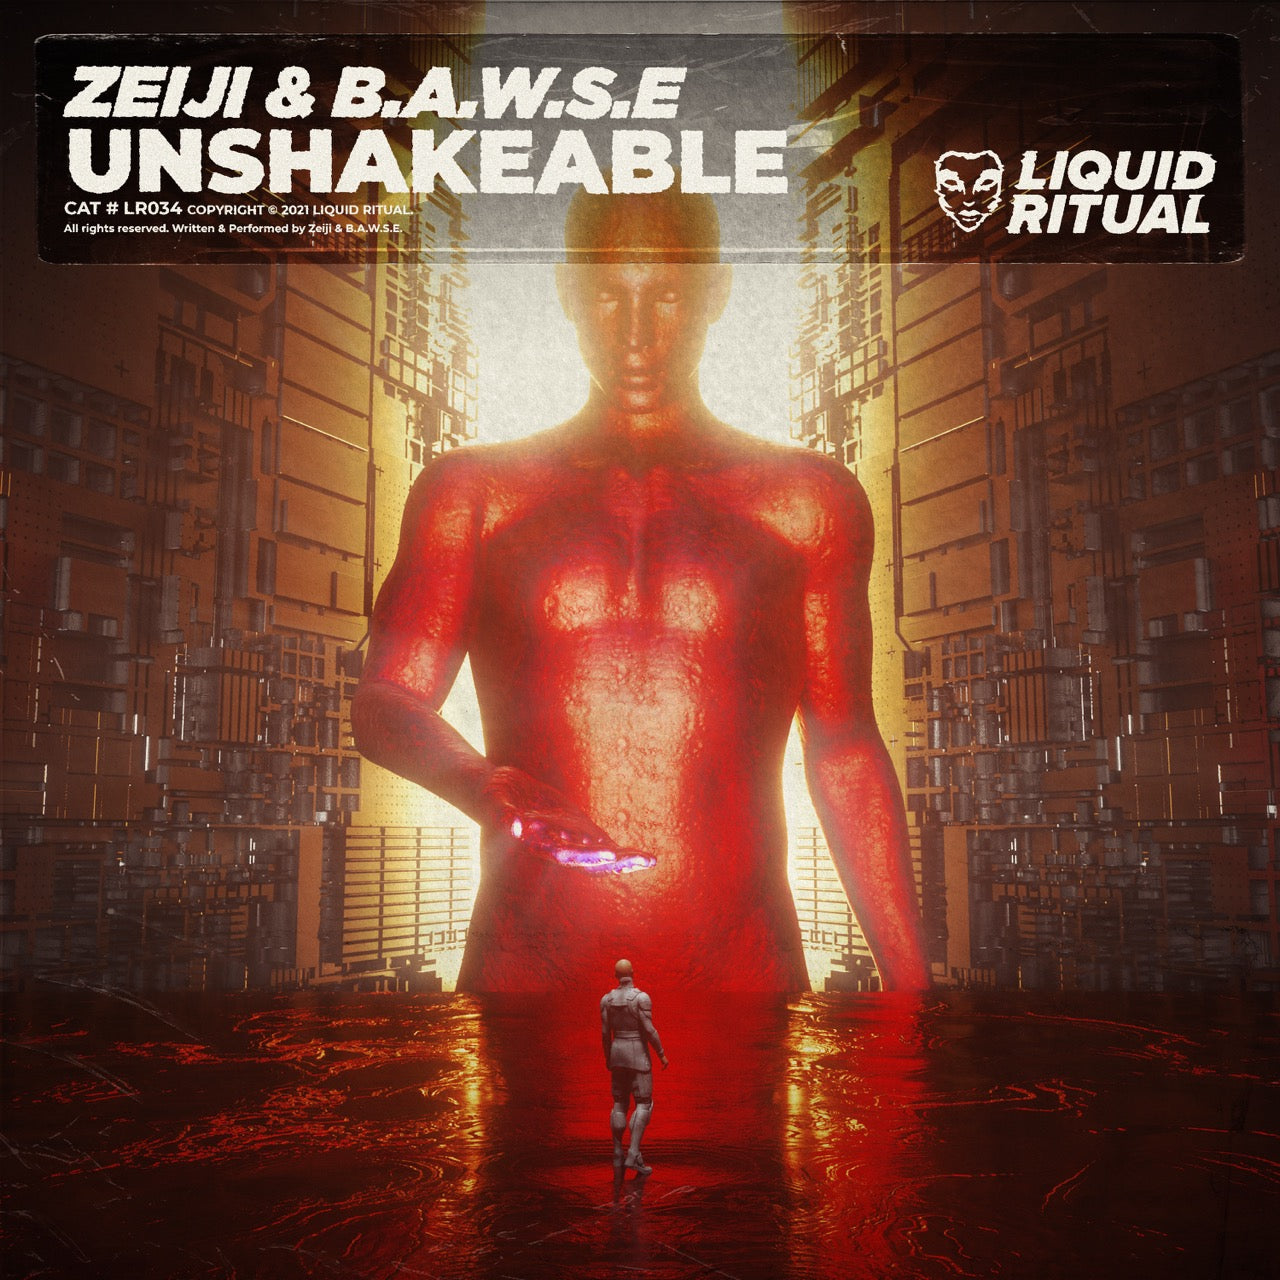 Zeiji & B.A.W.S.E. - Unshakeable